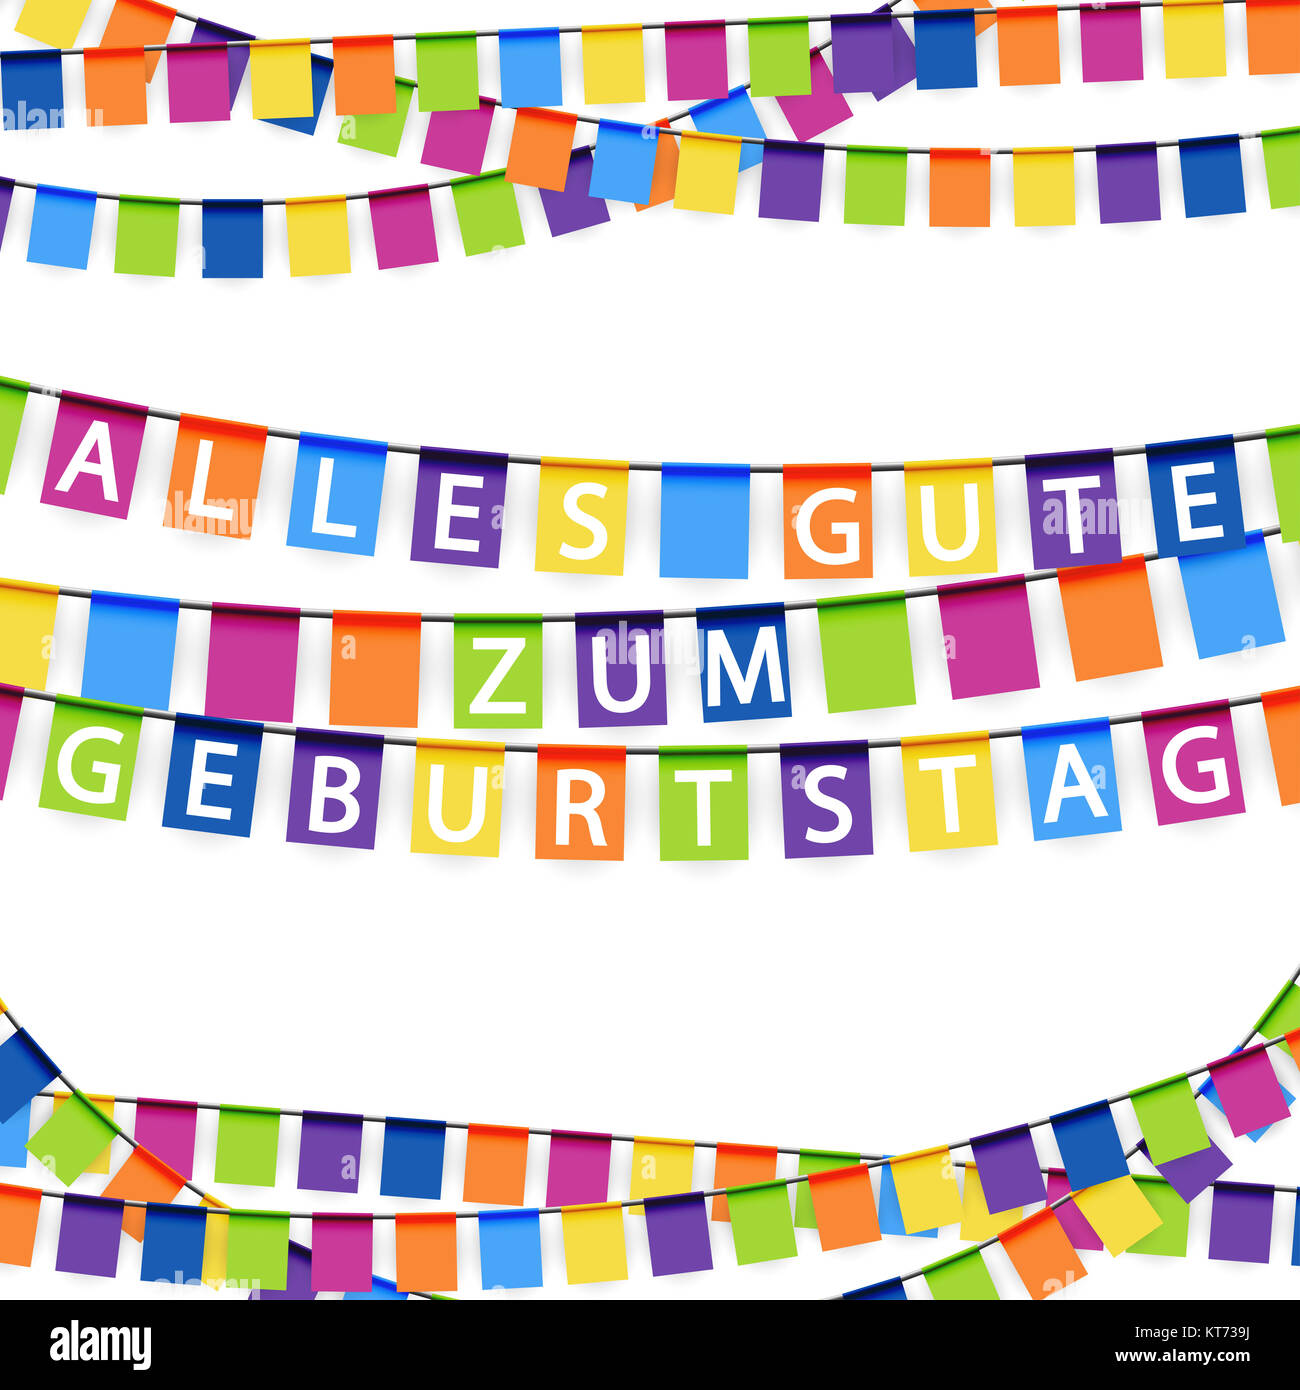 colored garlands background with white text Alles Gute zum Geburtstag Stock Photo